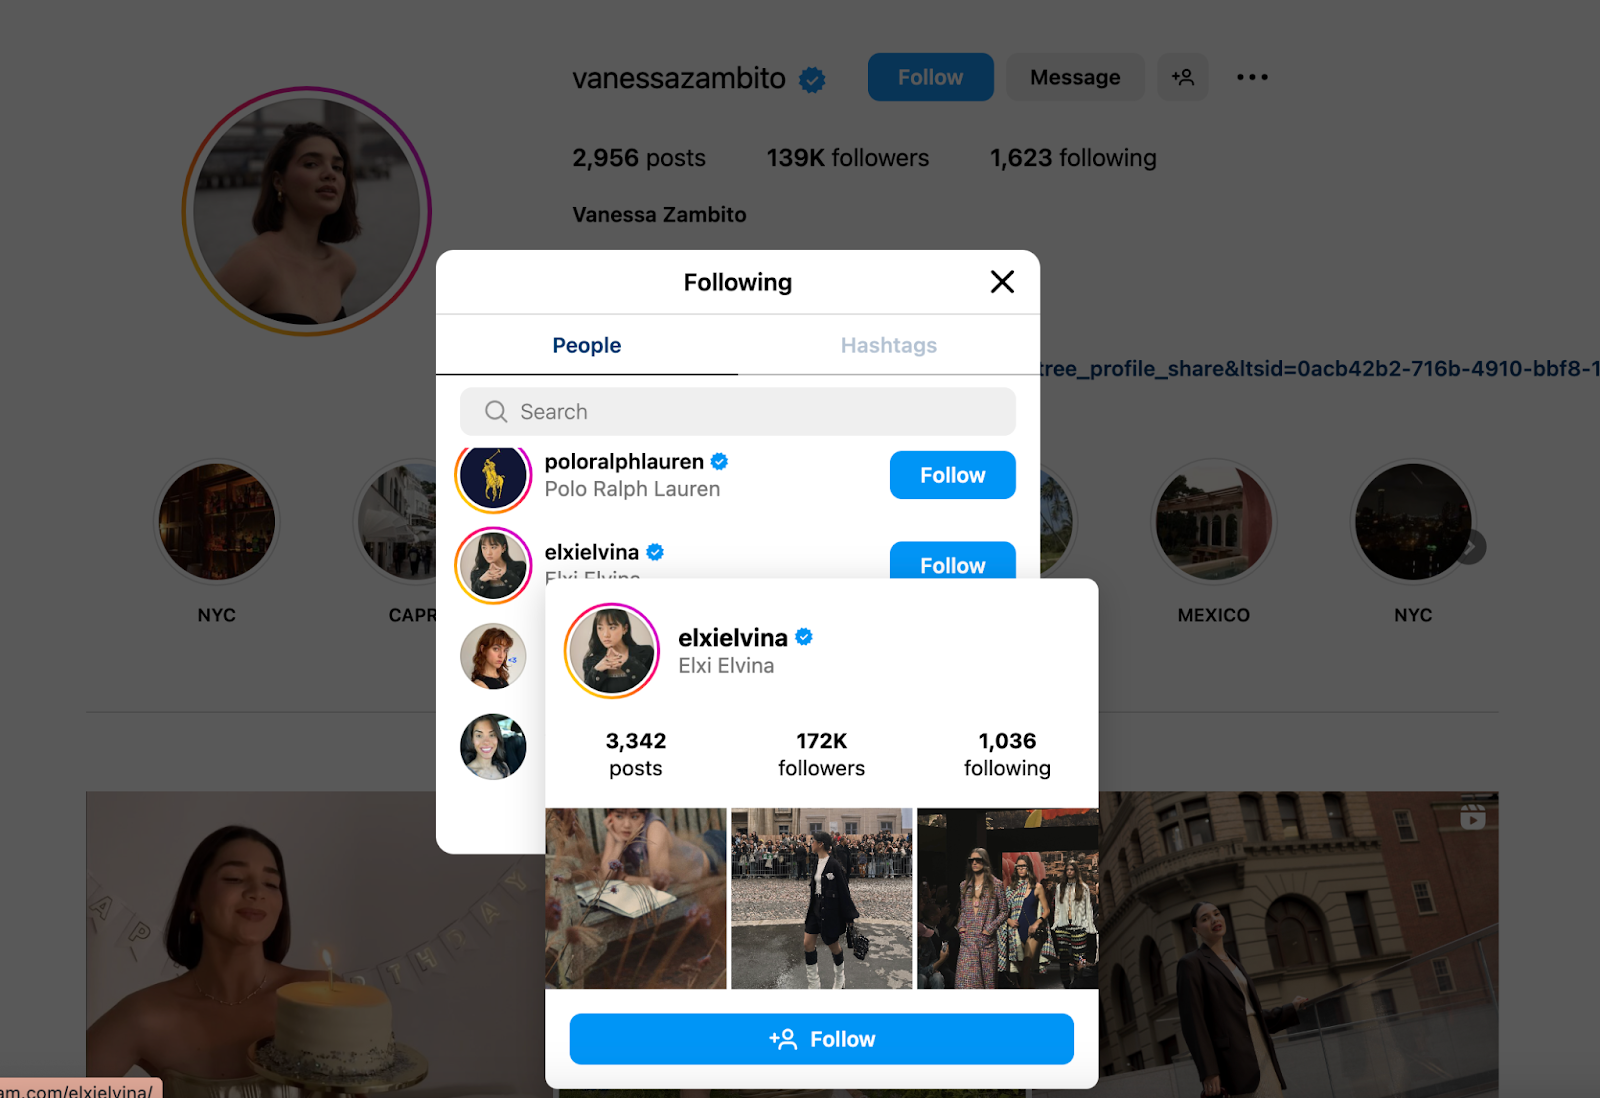 Vanessa Zambito’s following screen, showing Elxi Elvina’s profile 